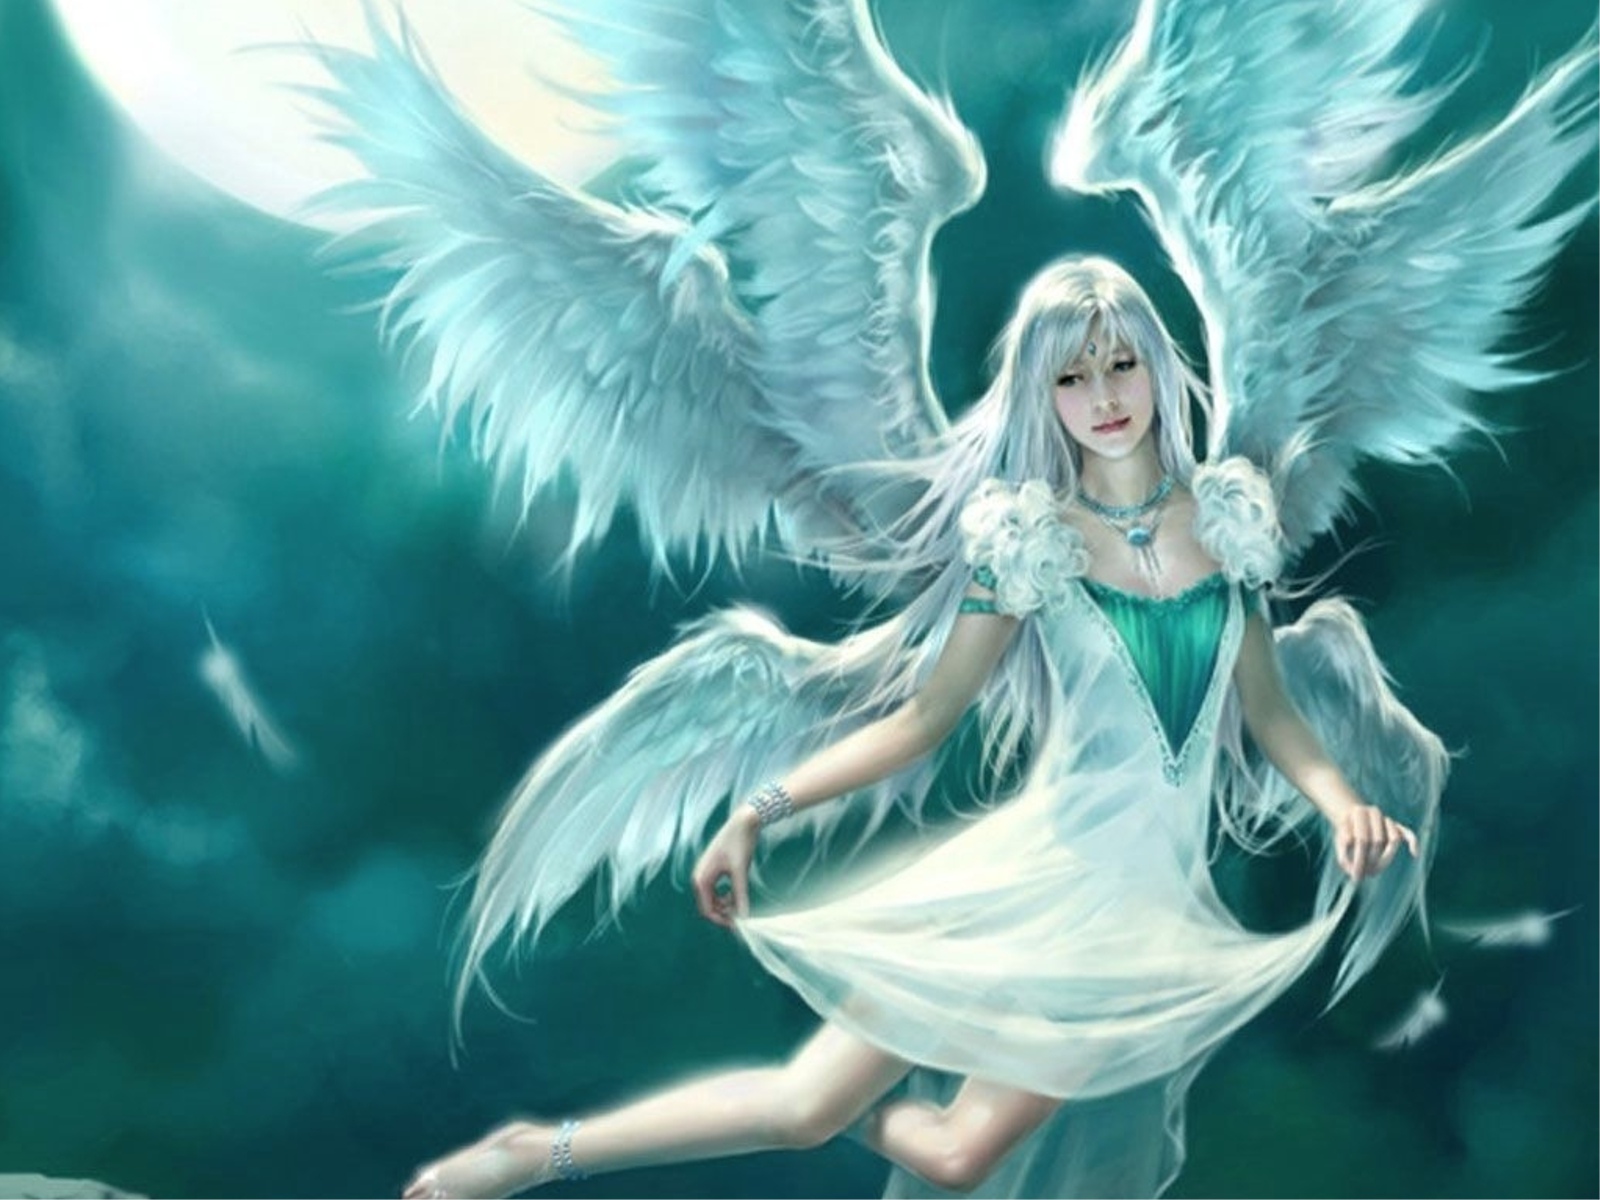 engel tapete,engel,cg kunstwerk,erfundener charakter,übernatürliche kreatur,mythologie